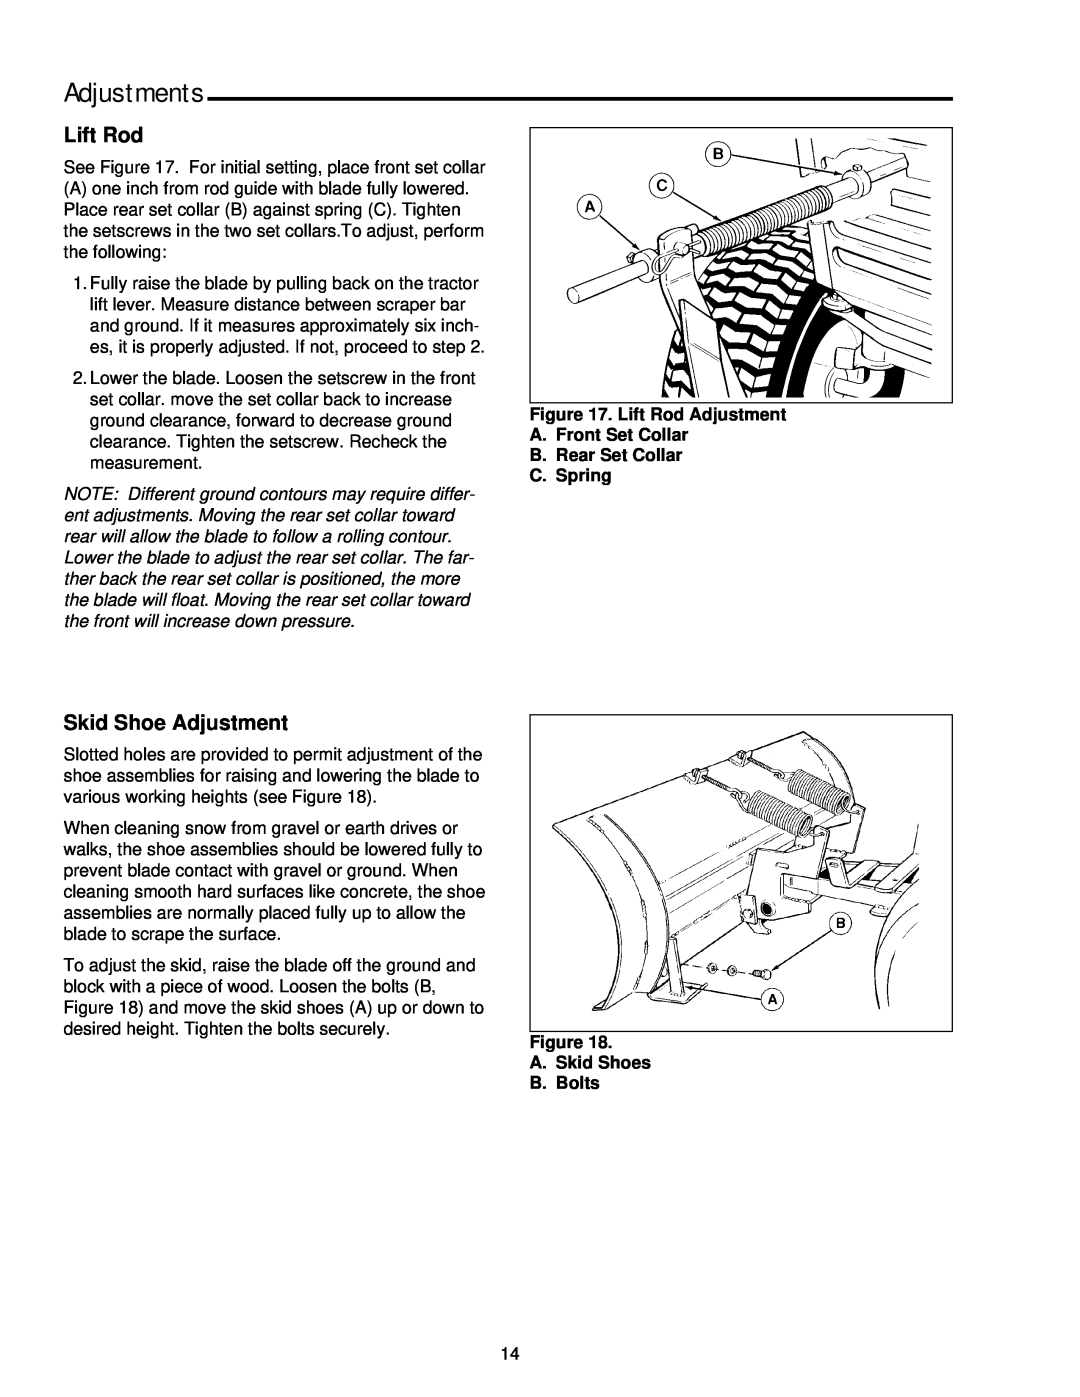 Simplicity 1692624 manual Adjustments, Skid Shoe Adjustment, Lift Rod Adjustment A. Front Set Collar B. Rear Set Collar 